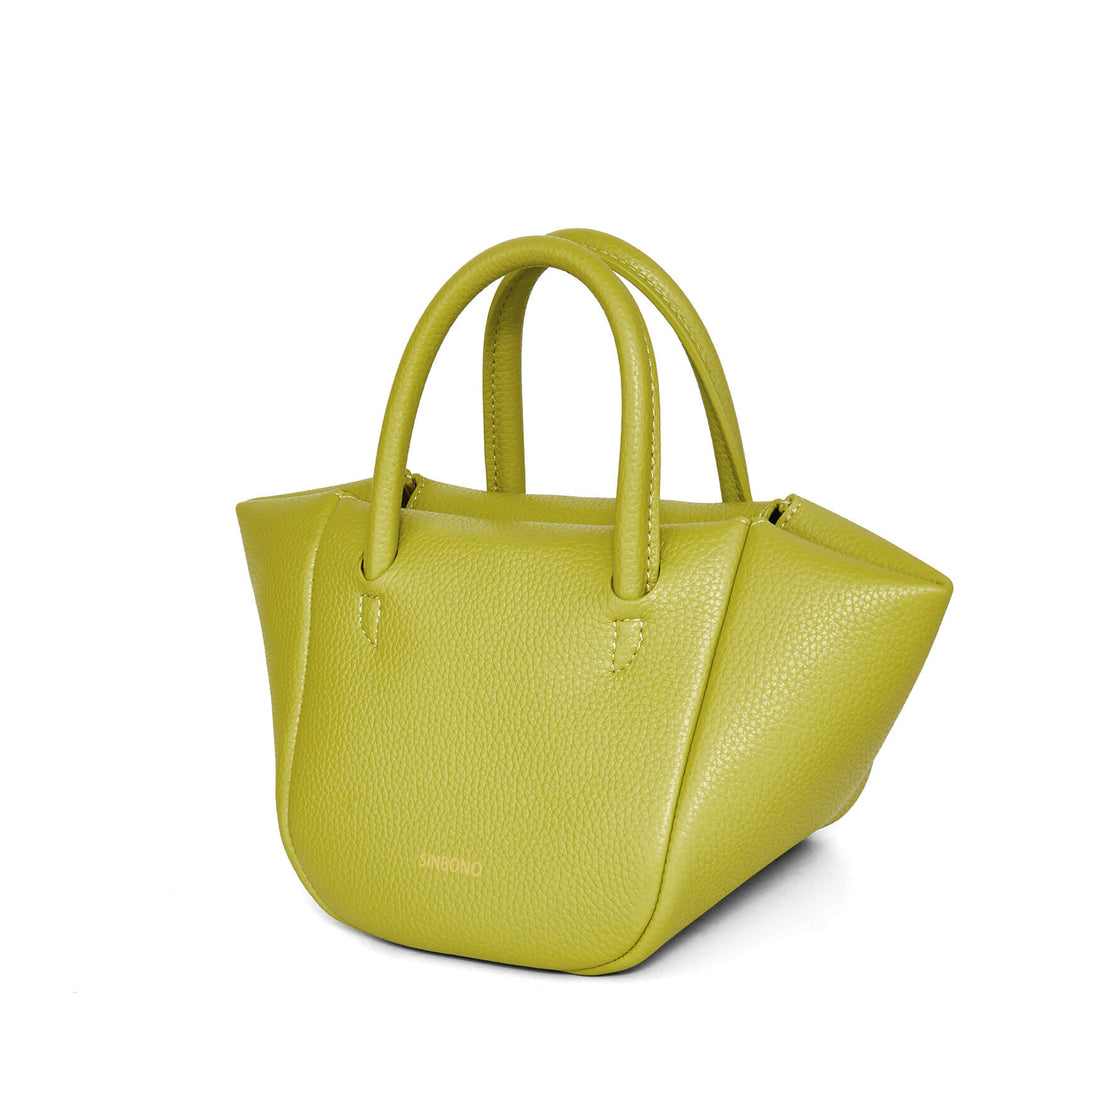 SINBONO Clutch Tote Handbags, Classic Vegan Leather Hobo Bags